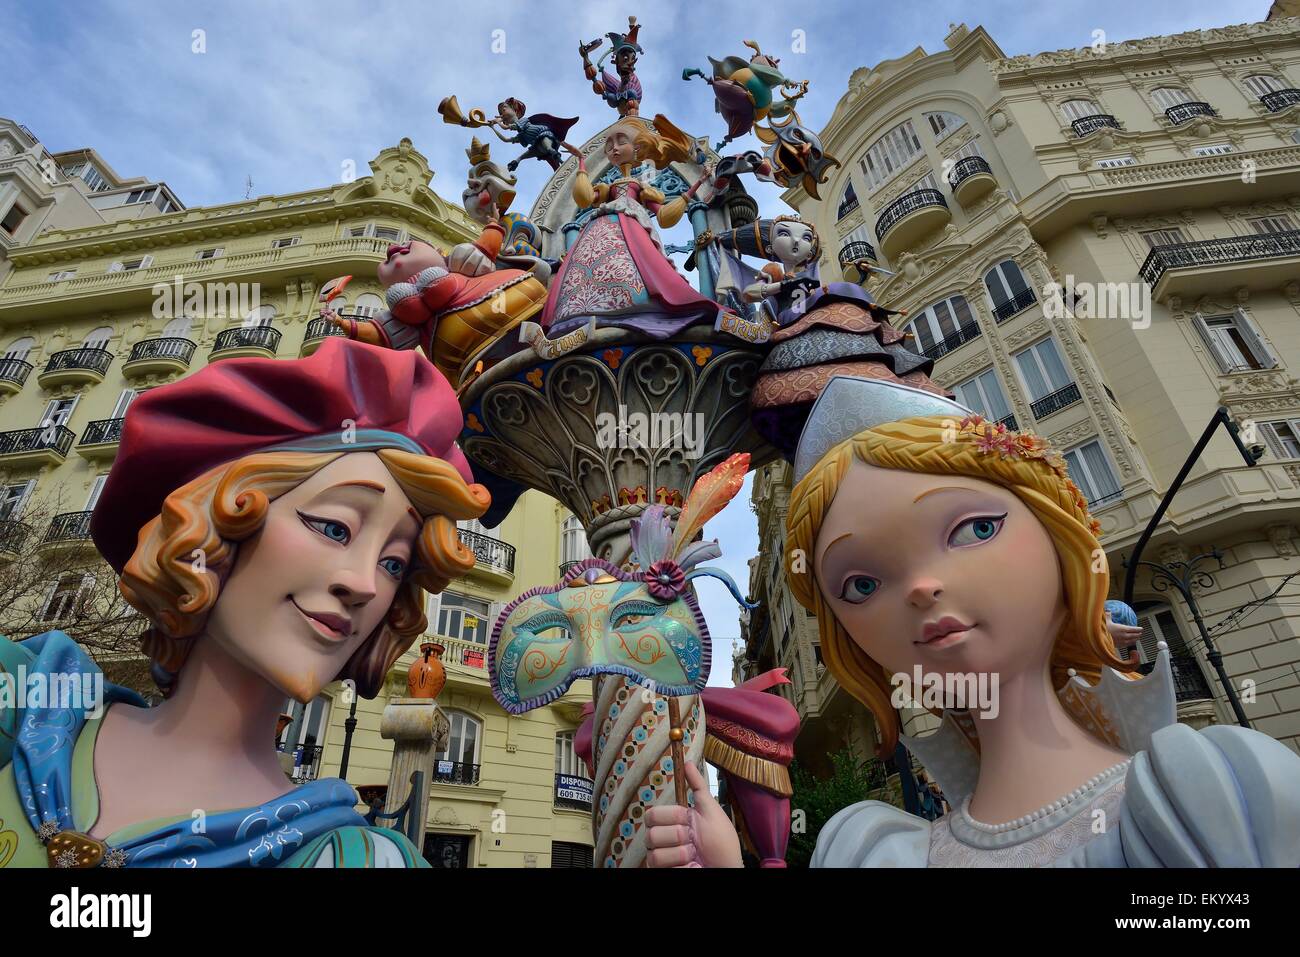 Falla figures at the Fallas festival, Valencia, Spain Stock Photo